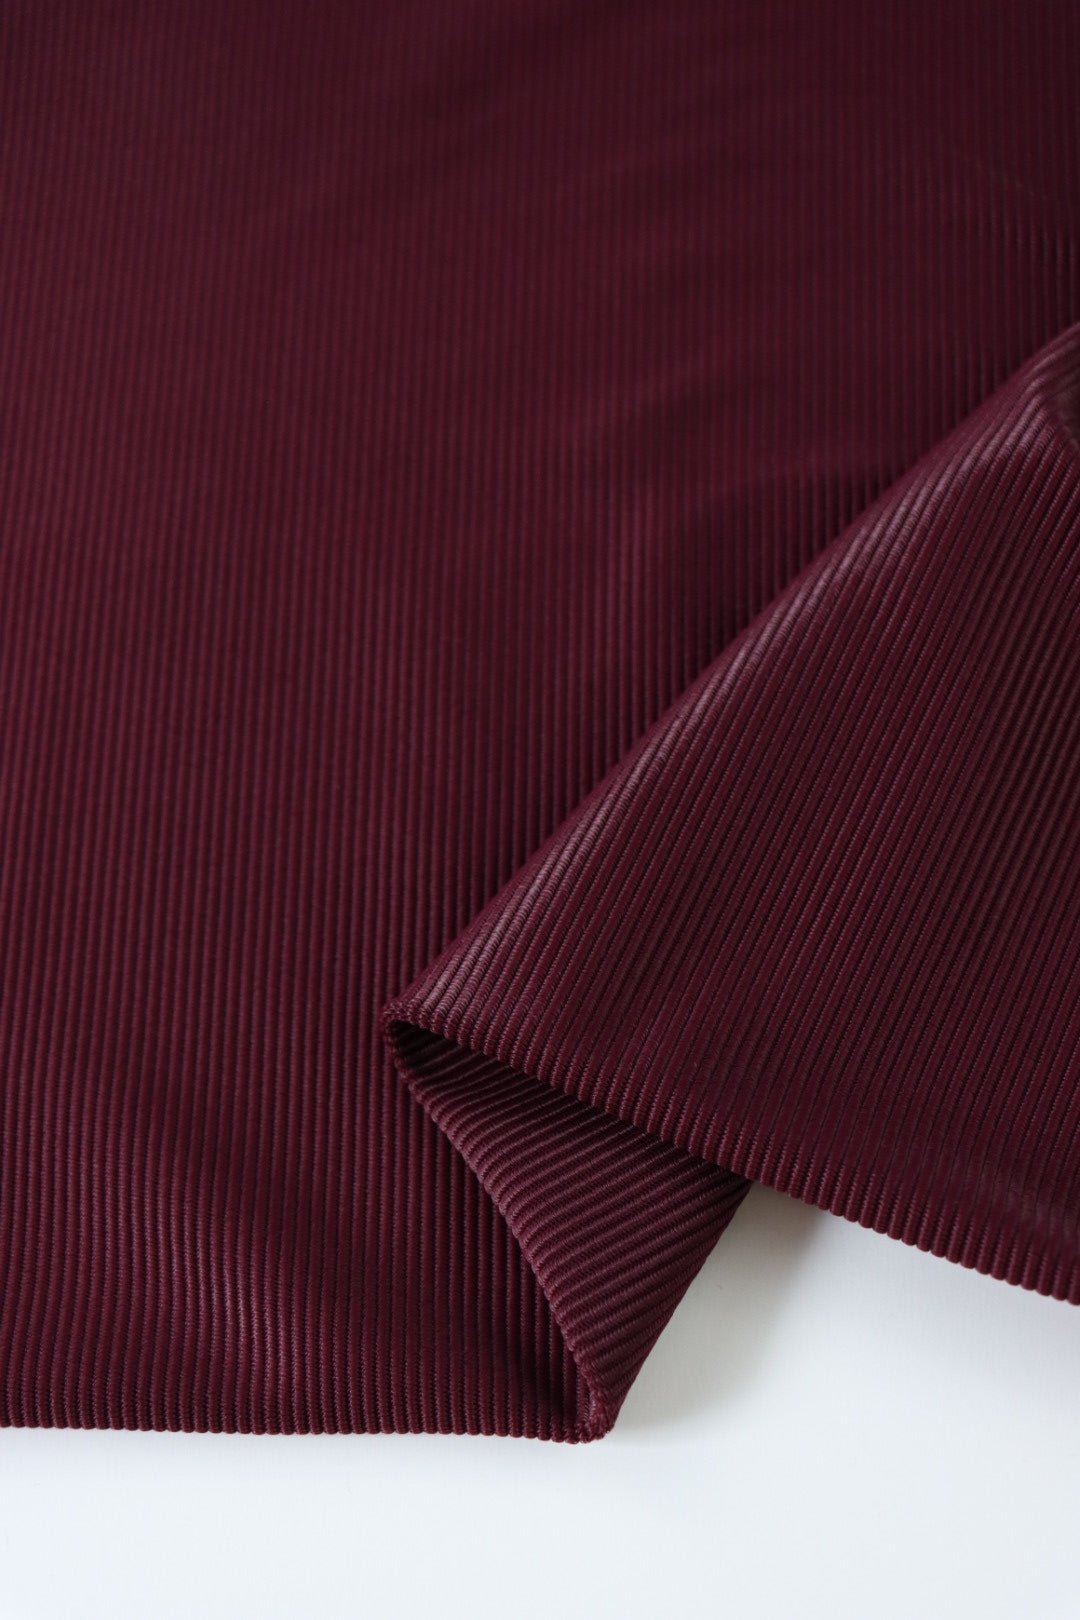 Jersey Fabric Scuba Crepe 4 Way Stretch Polyester Elastane